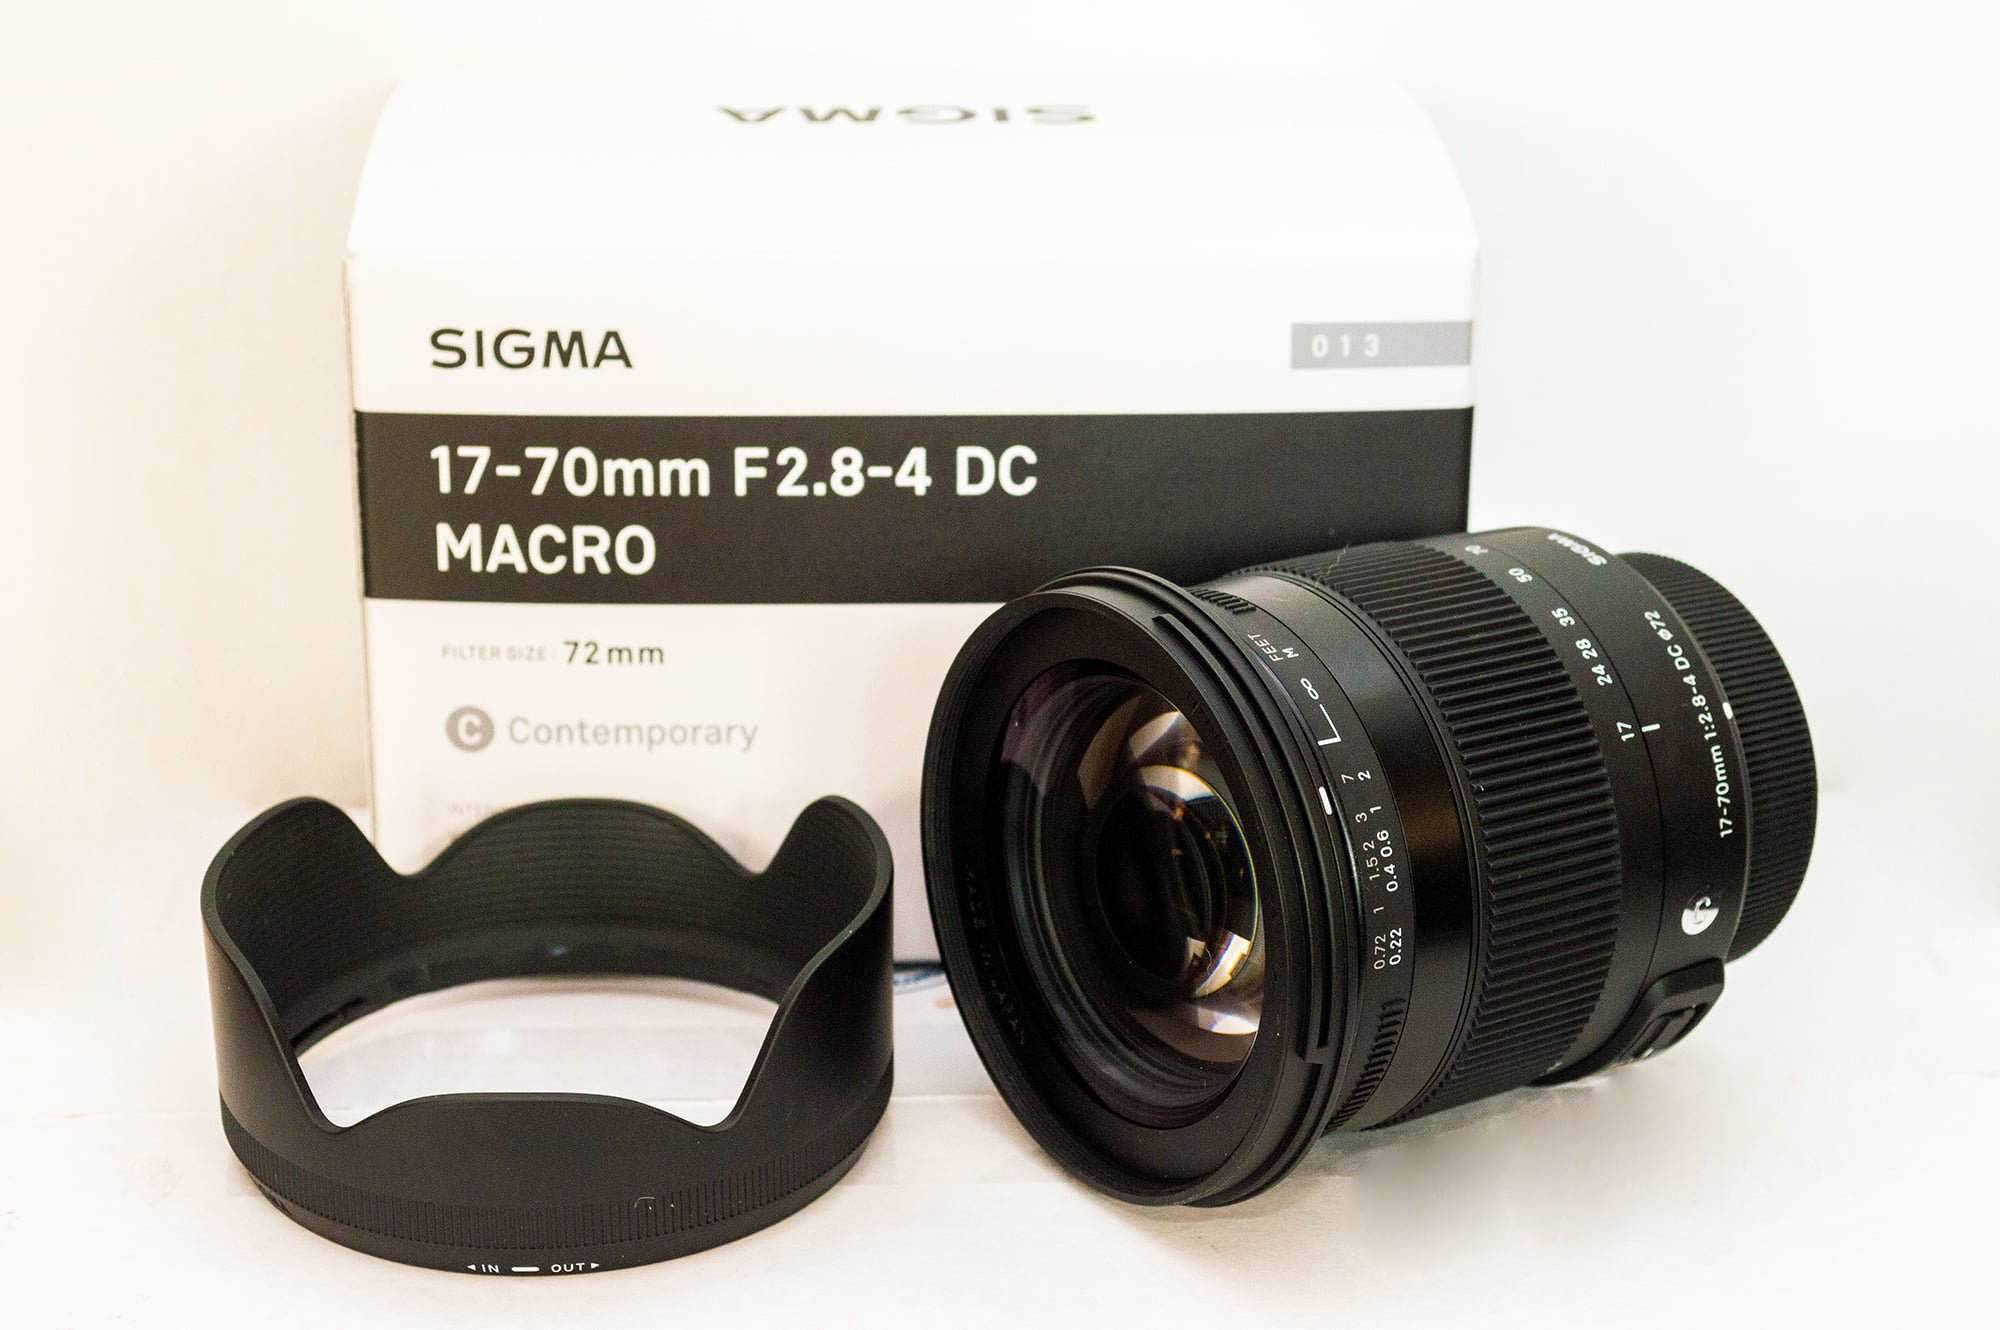 Sigma 70mm f 2.8 macro. Sigma af 17-70mm f/2.8-4 DC macro os HSM Nikon f. Sigma af 17-70mm f/2.8-4 DC macro os HSM Canon EF-S. Sigma 17-70mm f/2.8-4 DC macro. Sigma 17 70 Canon.